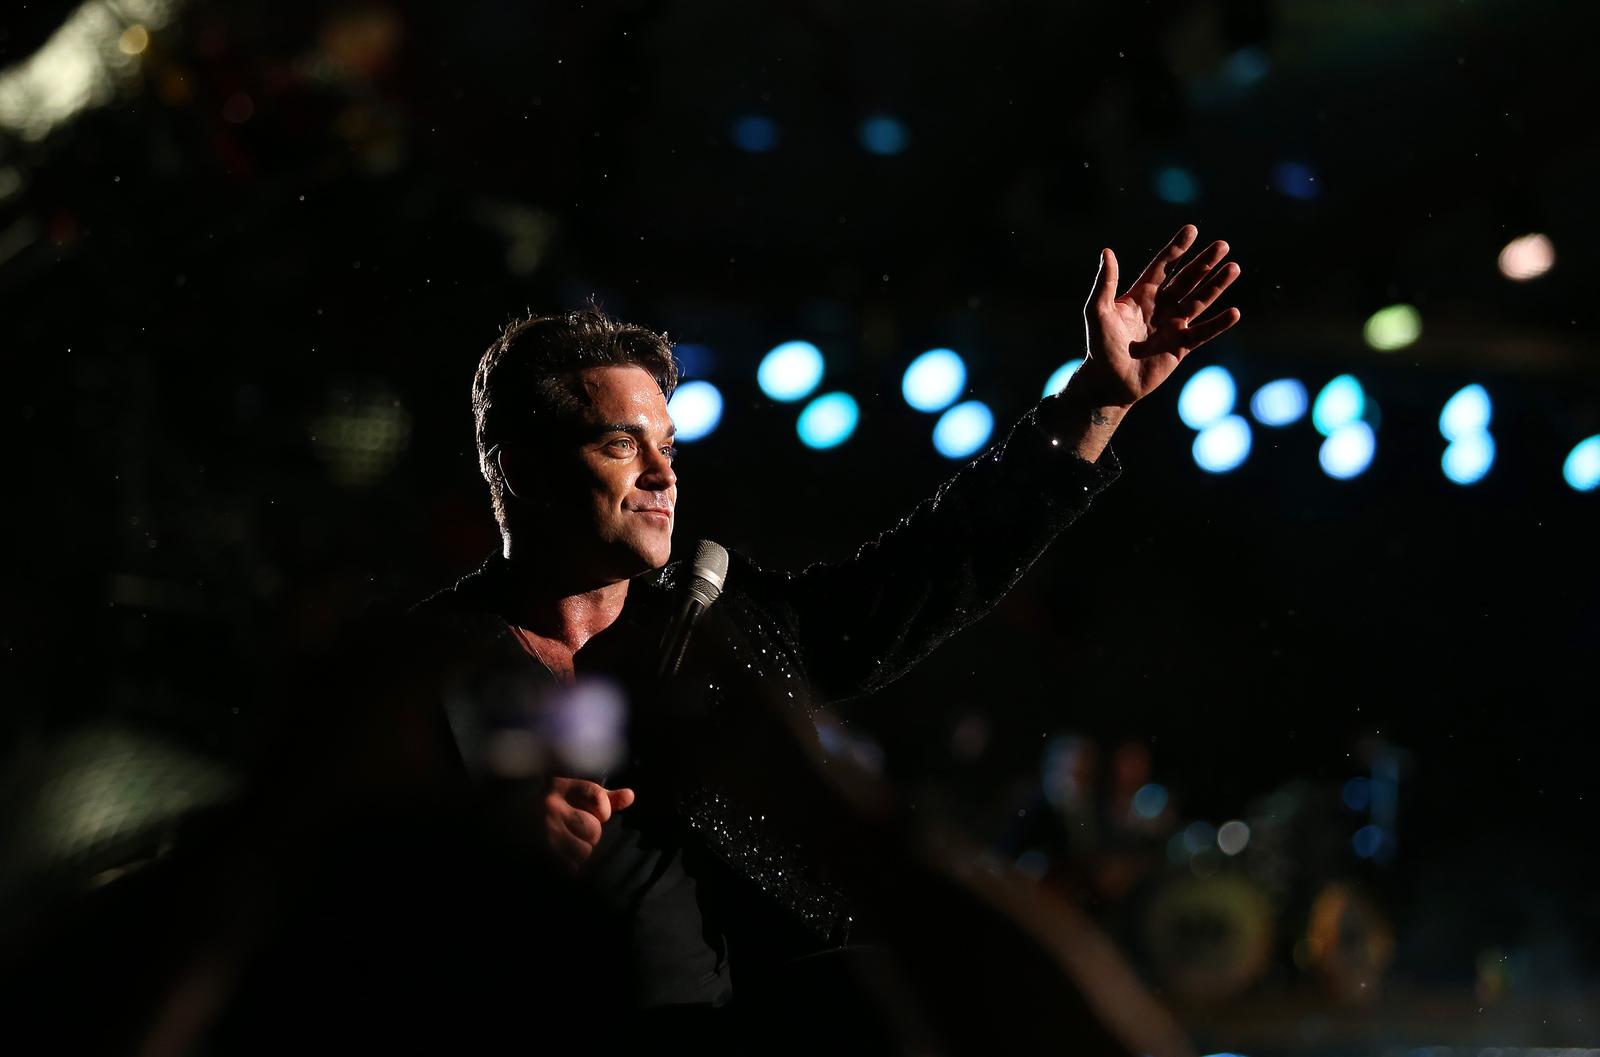 13.08.2013., Zagreb - Britanski pjevac Robbie Williams odrzao je koncert na maksimirskom stadionu u sklopu turneje Take the crown.rPhoto: Petar Glebov/Pixsell